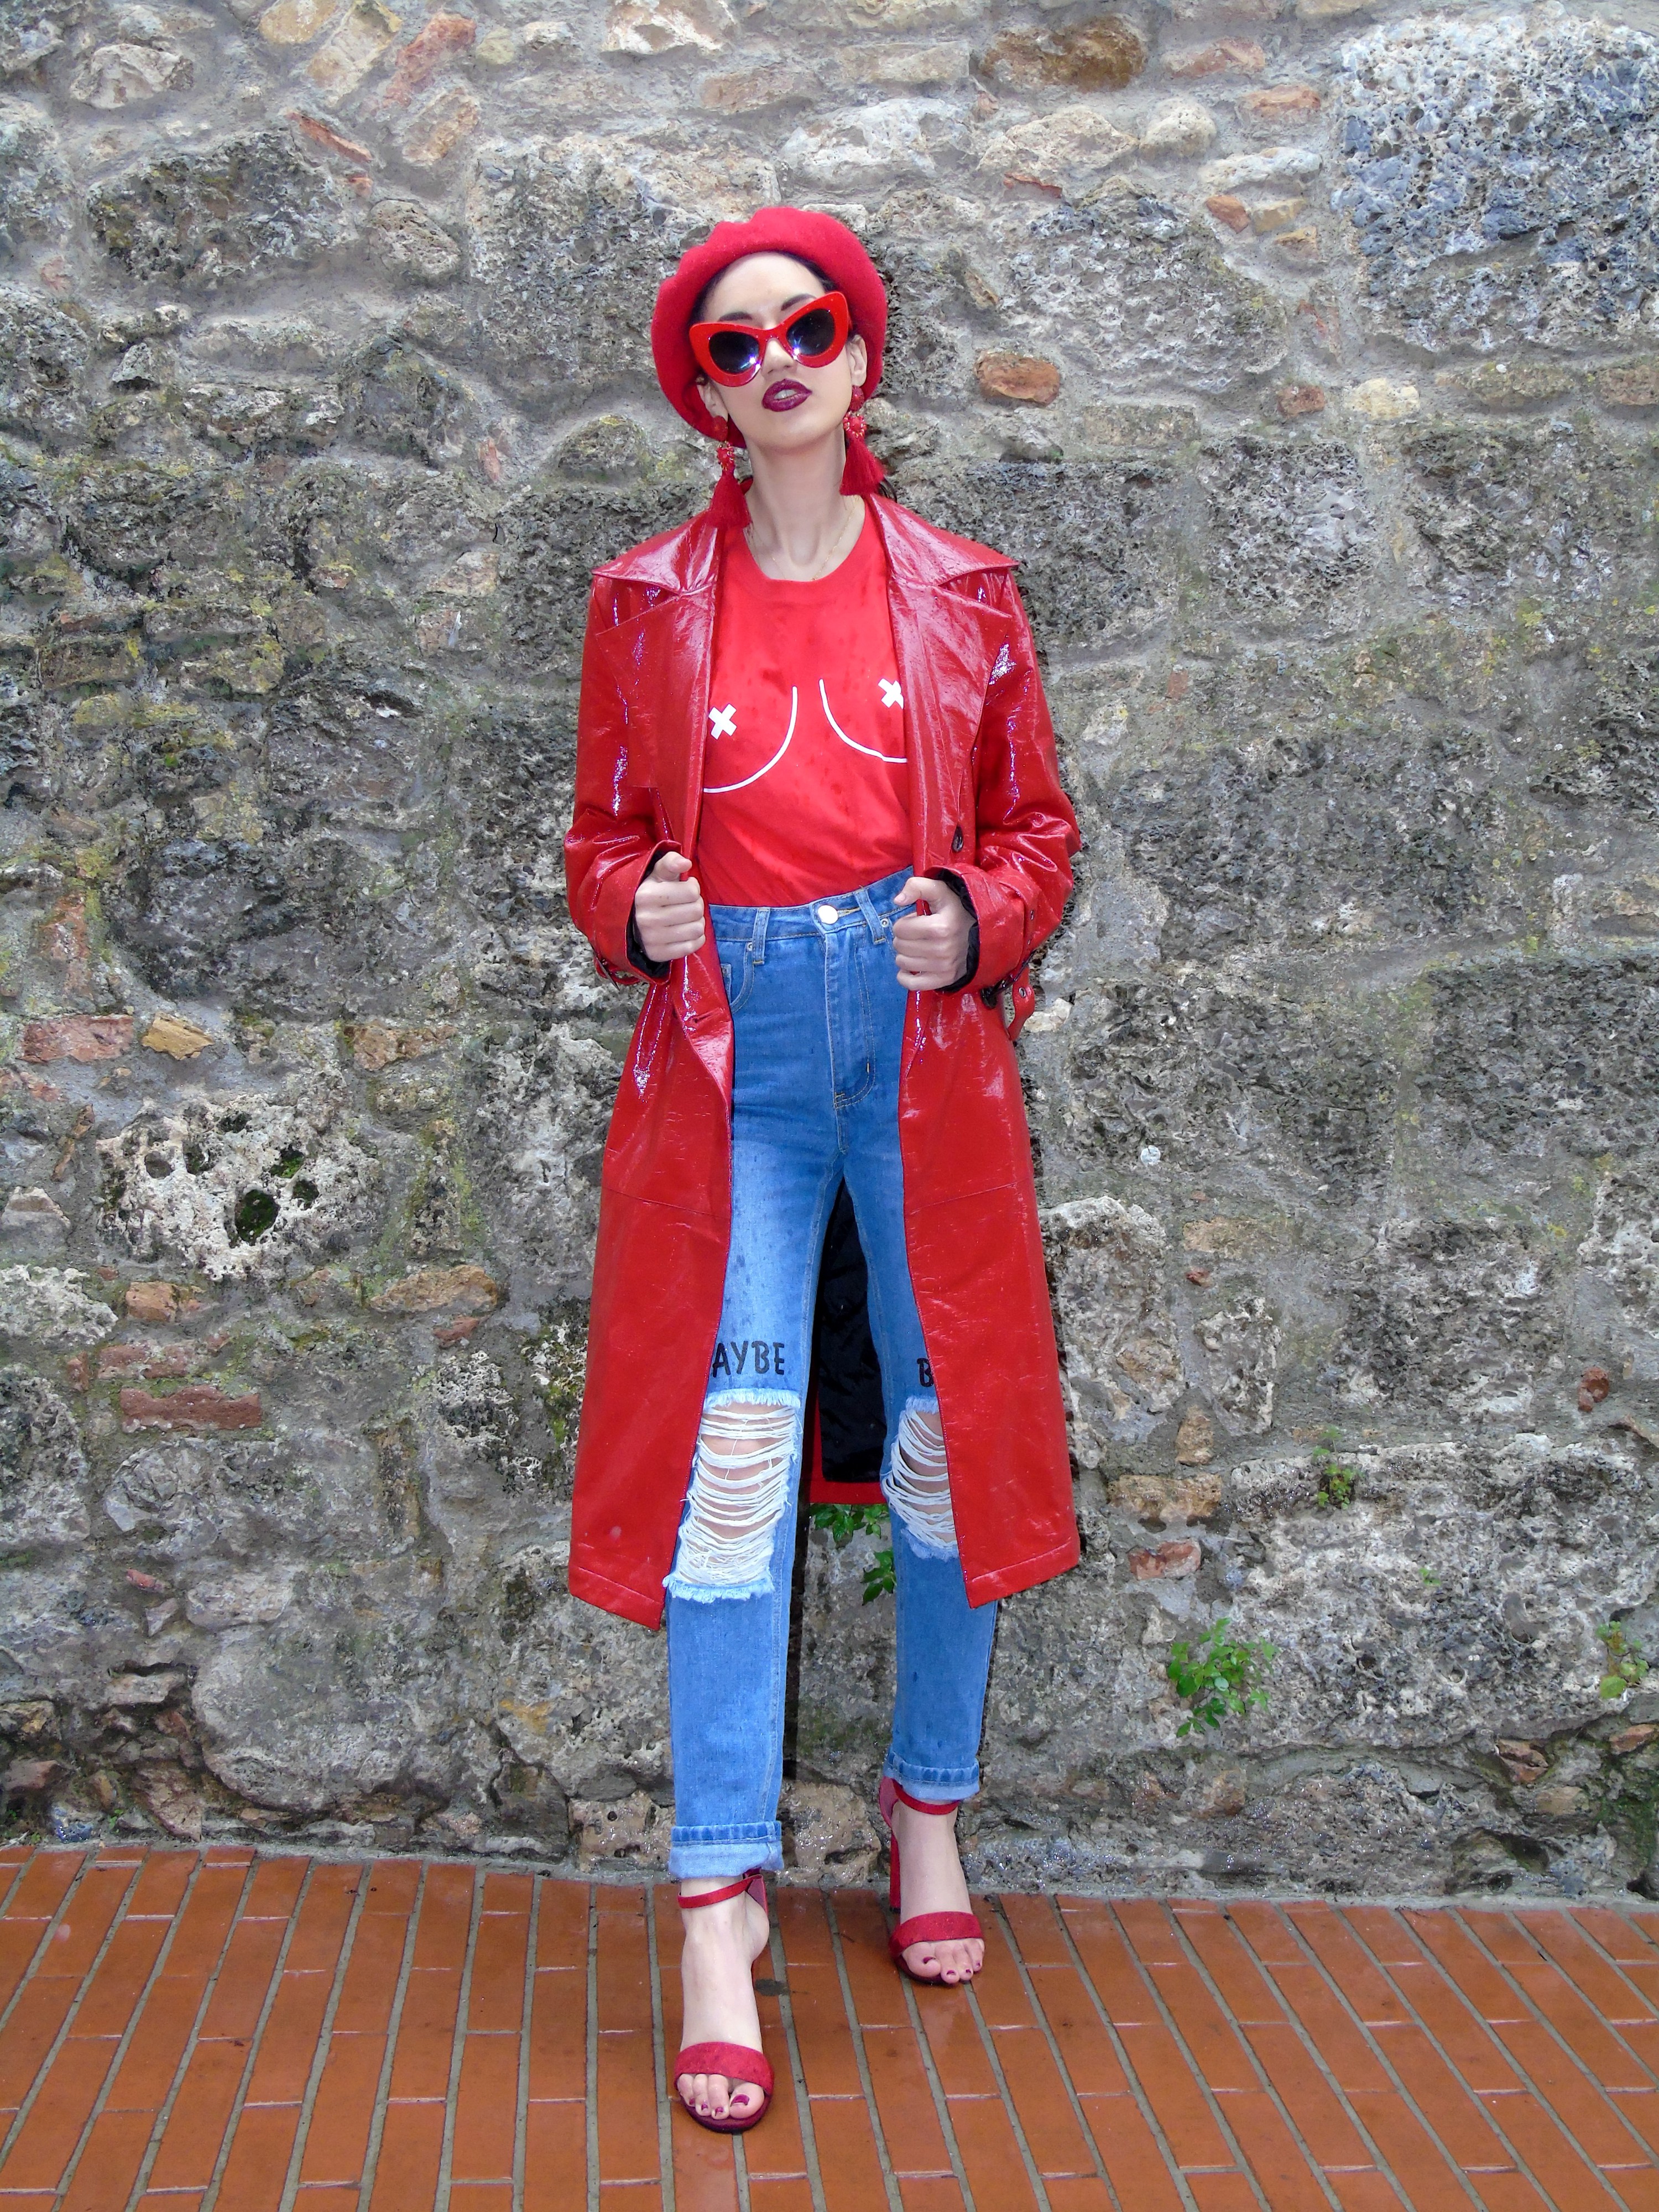 <img src="ana.jpg" alt="ana red vinyl coat holiday in Tuscany"/>